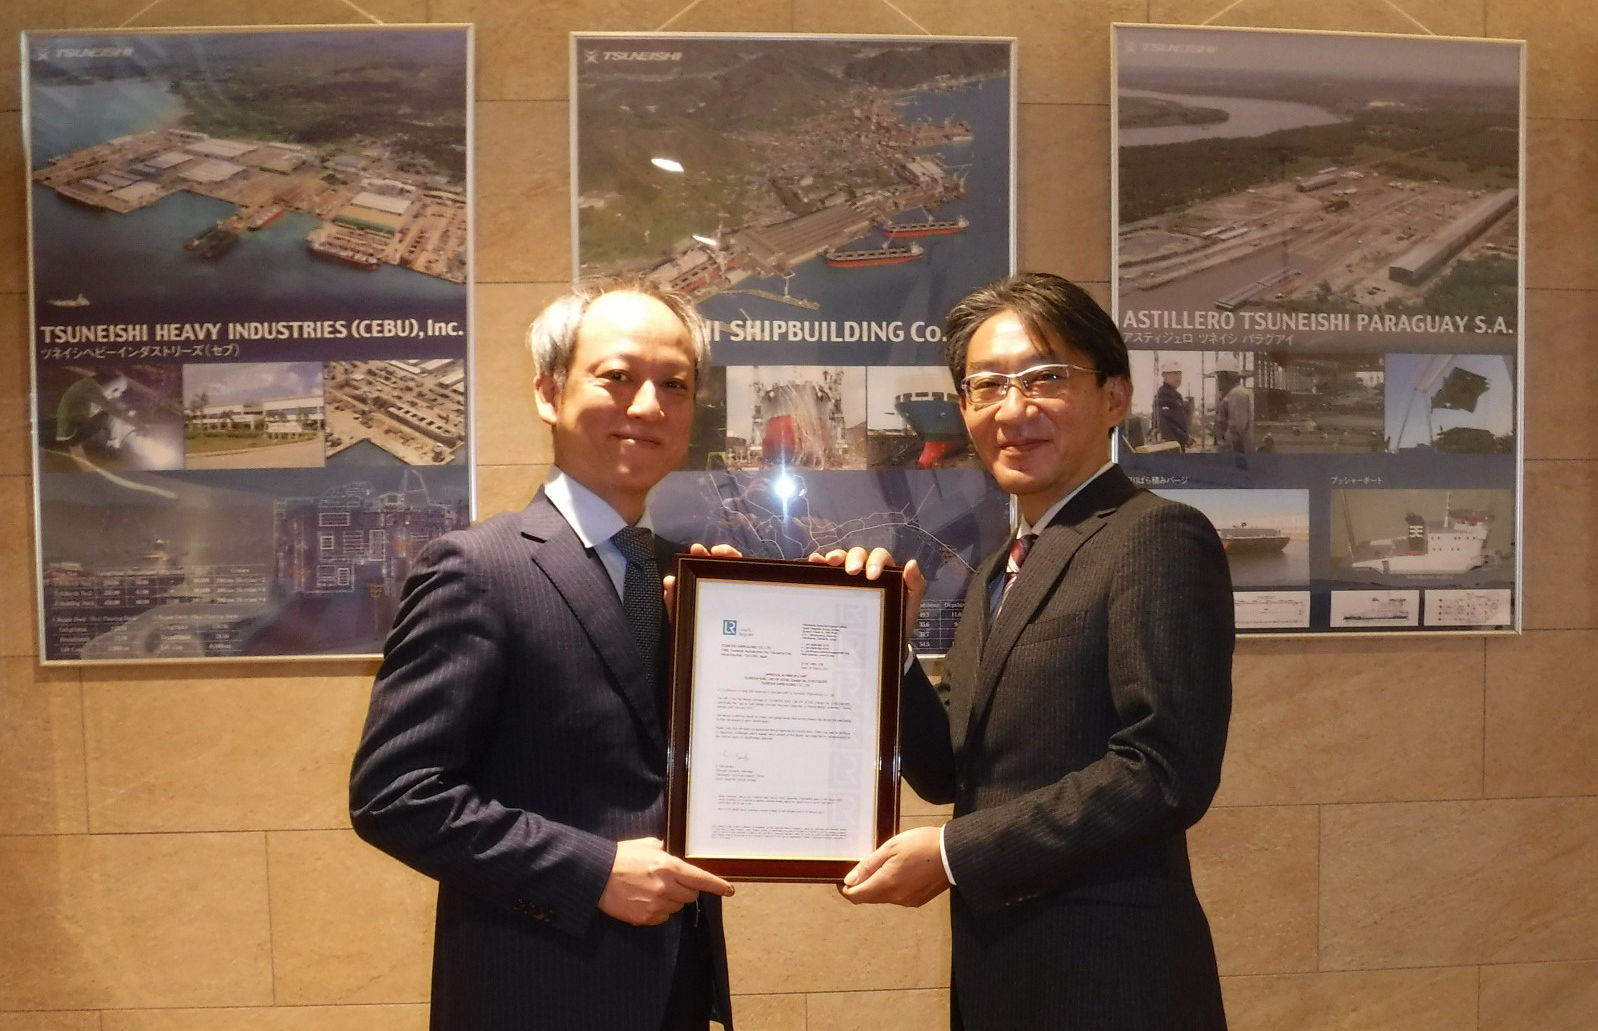 Tsuneishi Shipbuilding receives AiP for its Kamsarmax LNG dual-fuel vessel